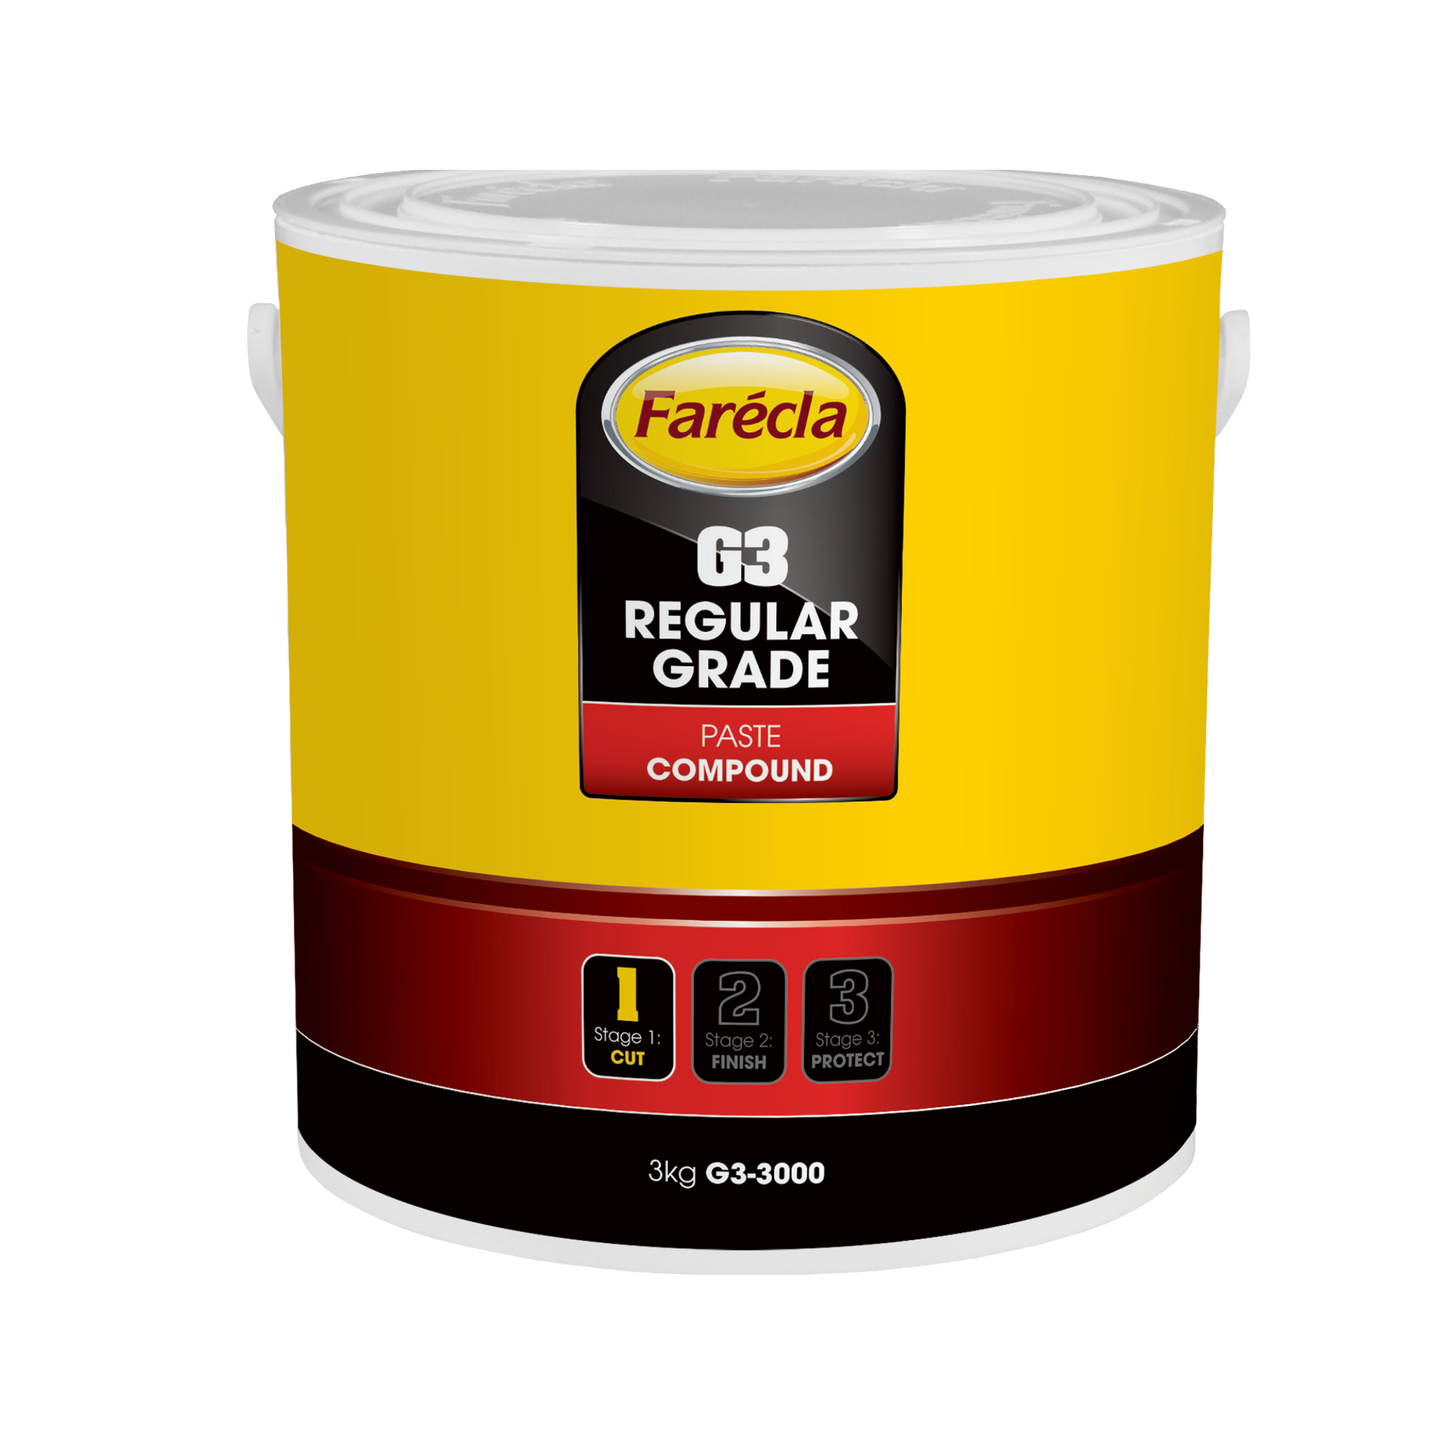 Farecla G3 Regular Grade Paste Compound - 3 kg